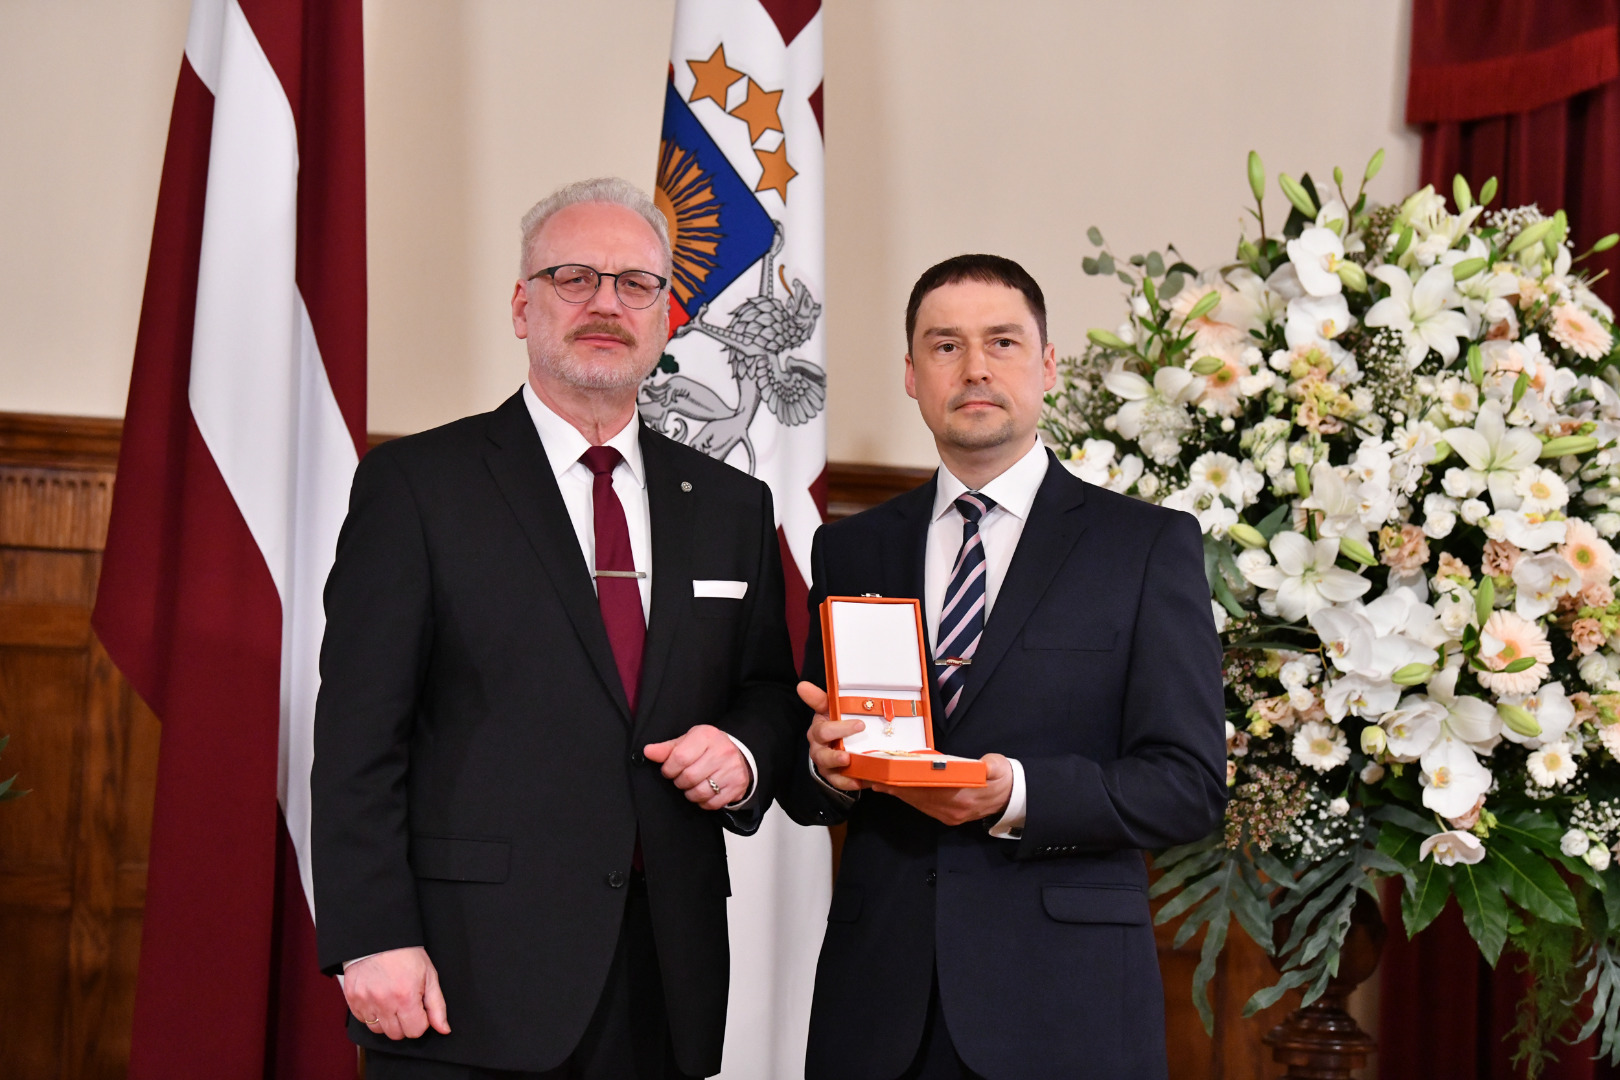 Head Prosecutor Juris Juriss received the highest state award